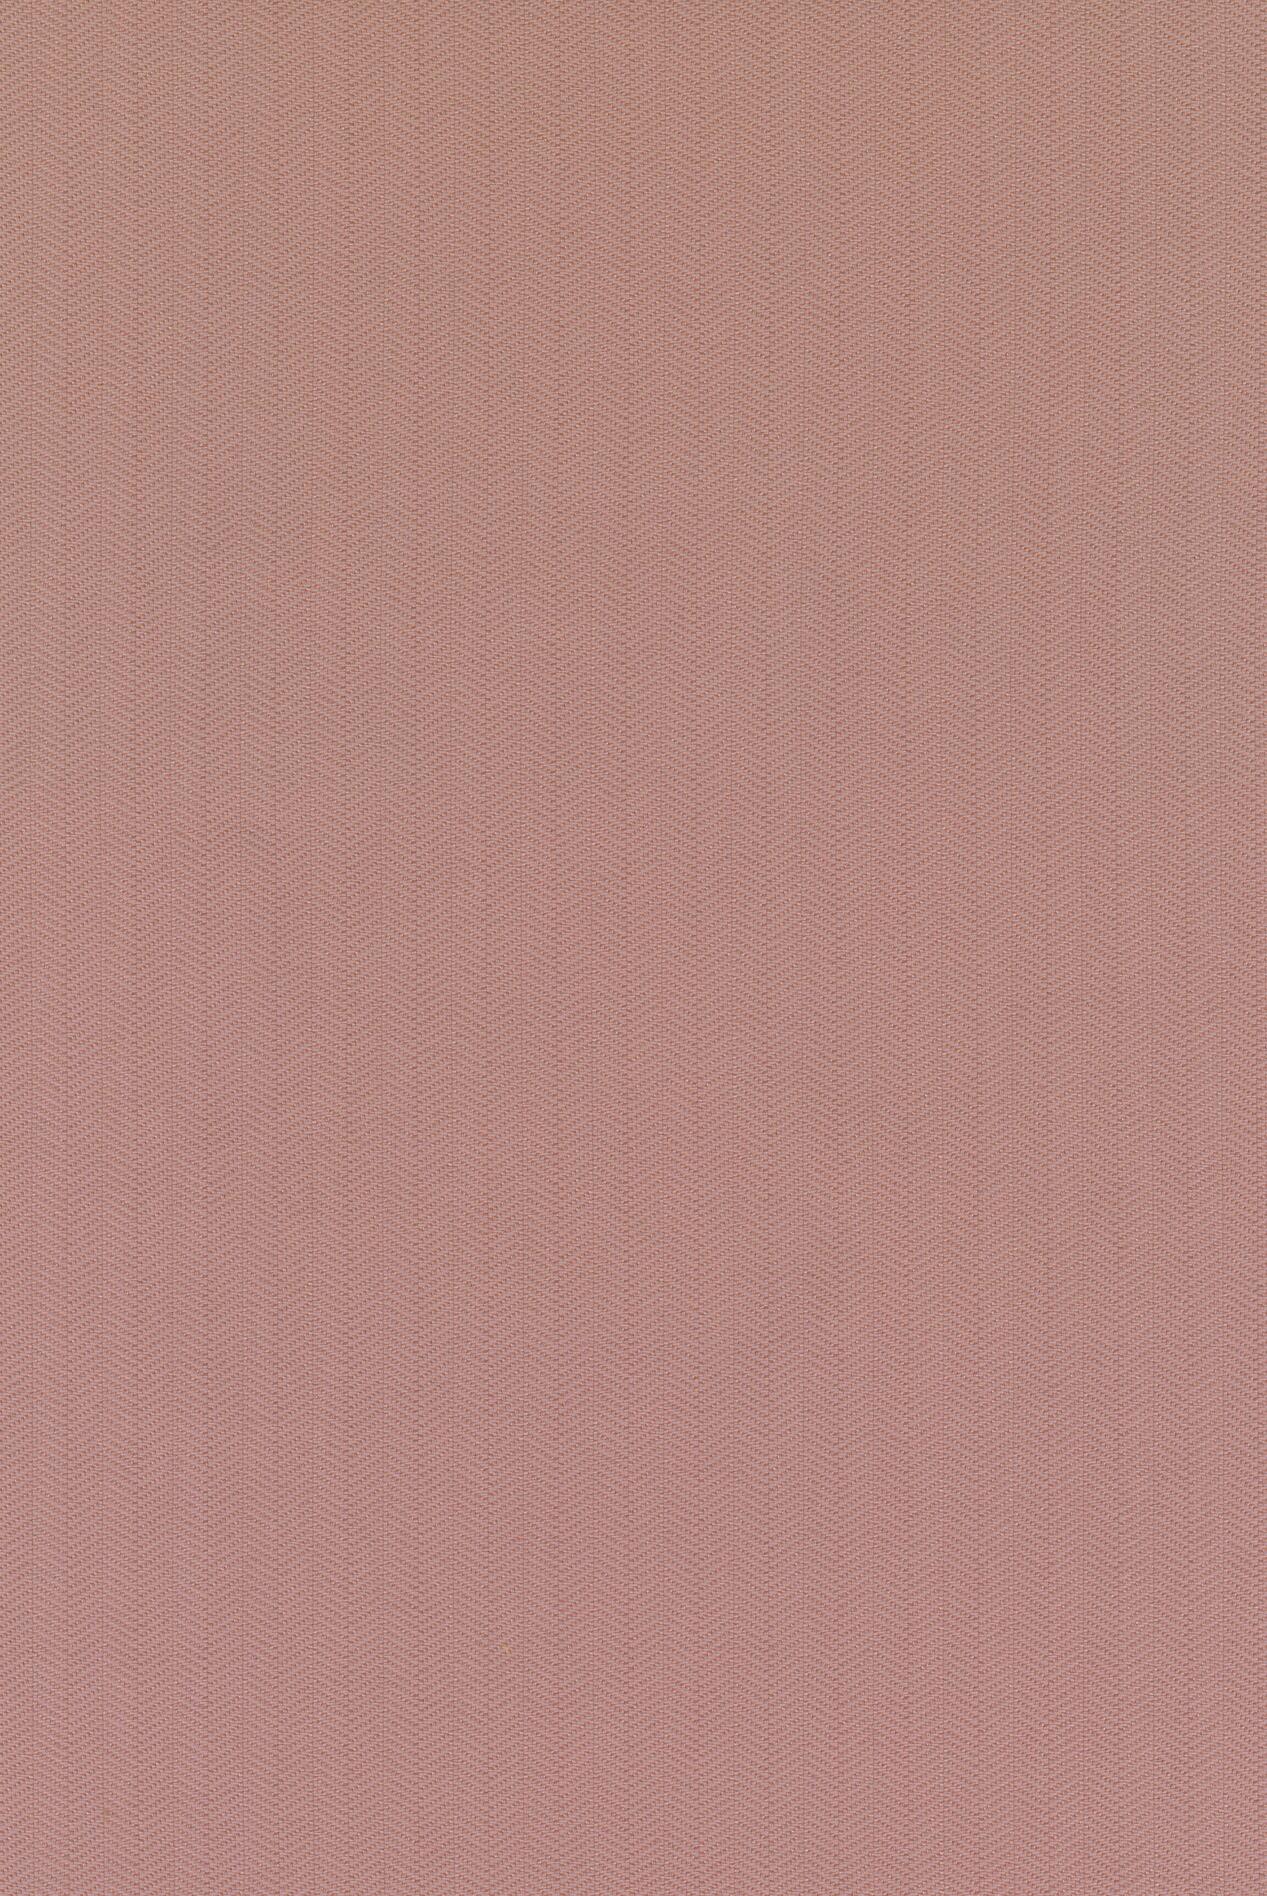 kvadrat-broken-twill-weave-upholstery-fabric-0626